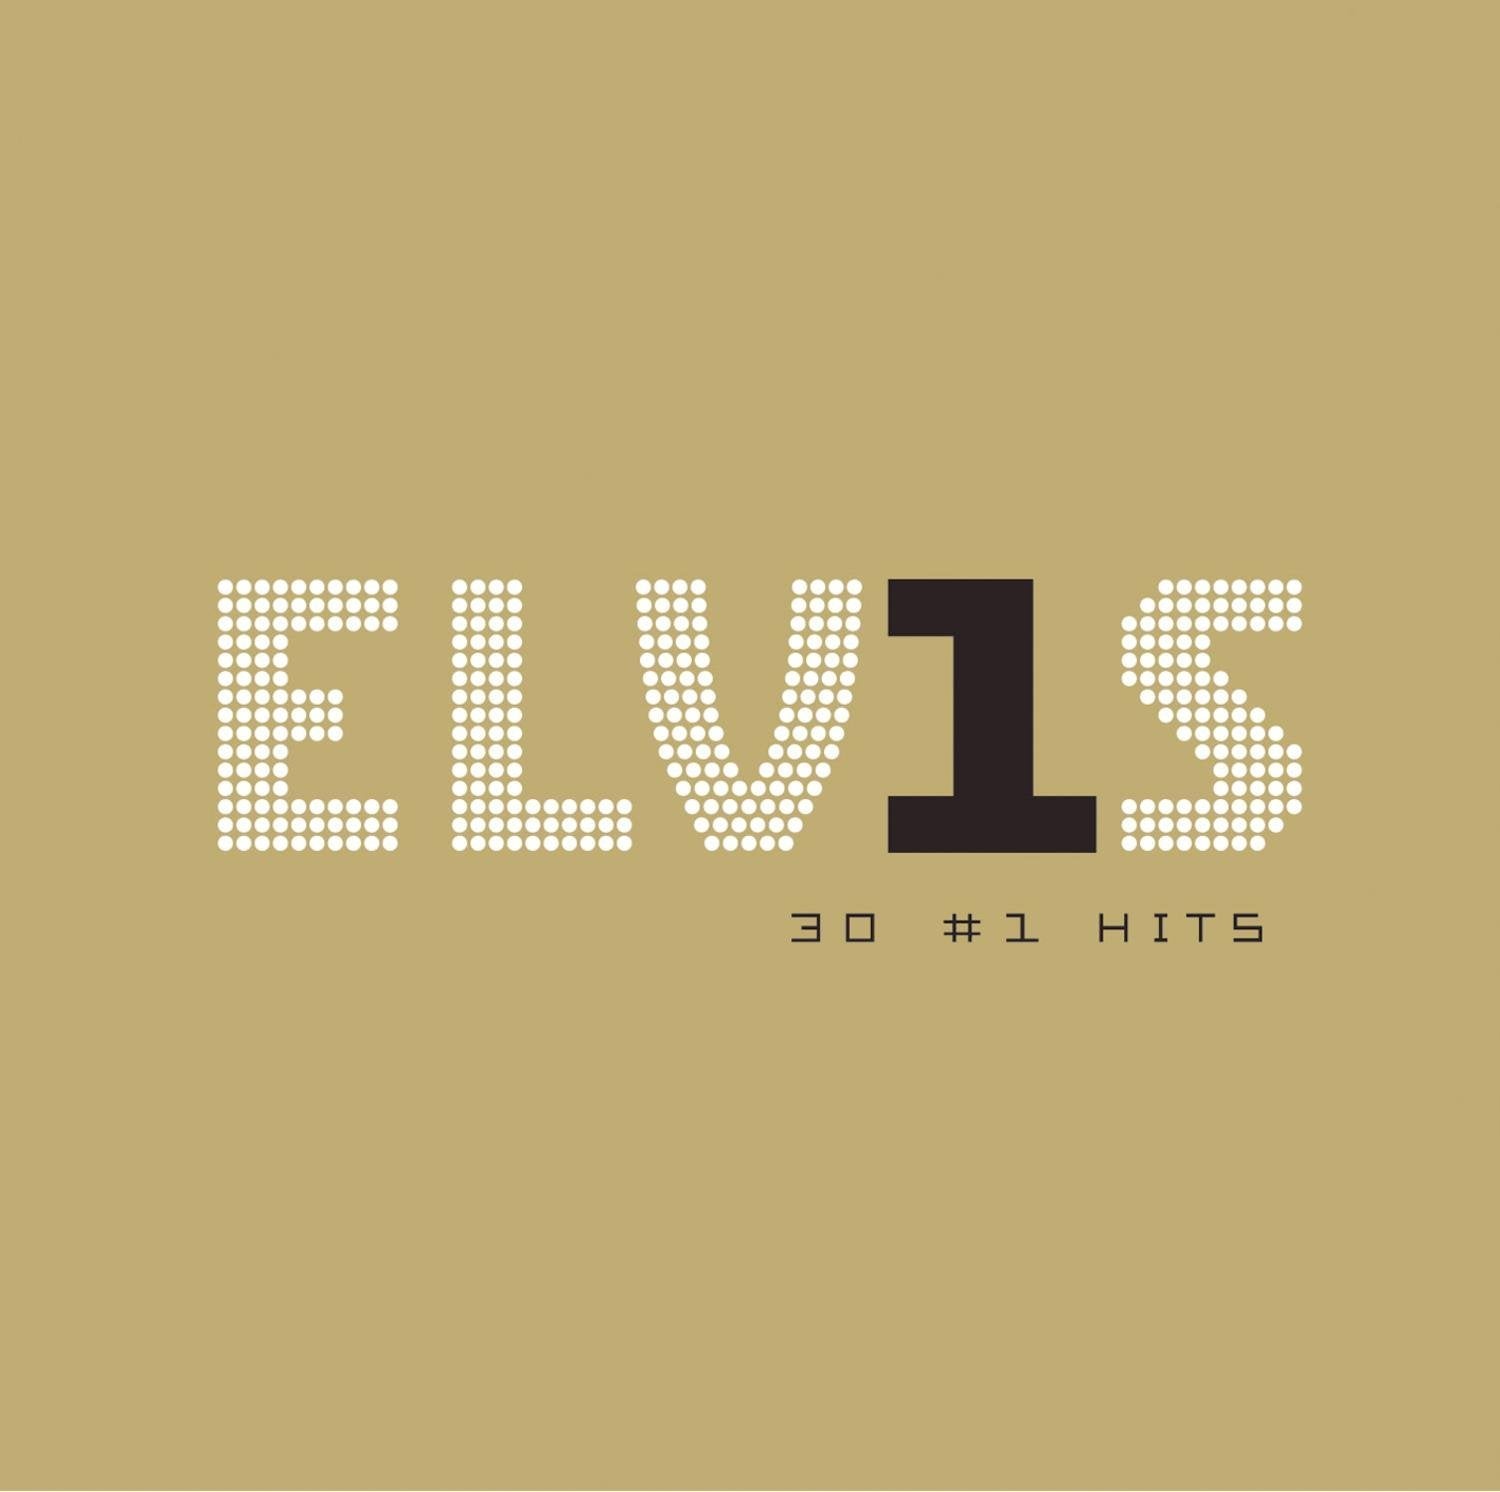 Elvis Presley Elv1s 30 #1 Hits CD (SONY)